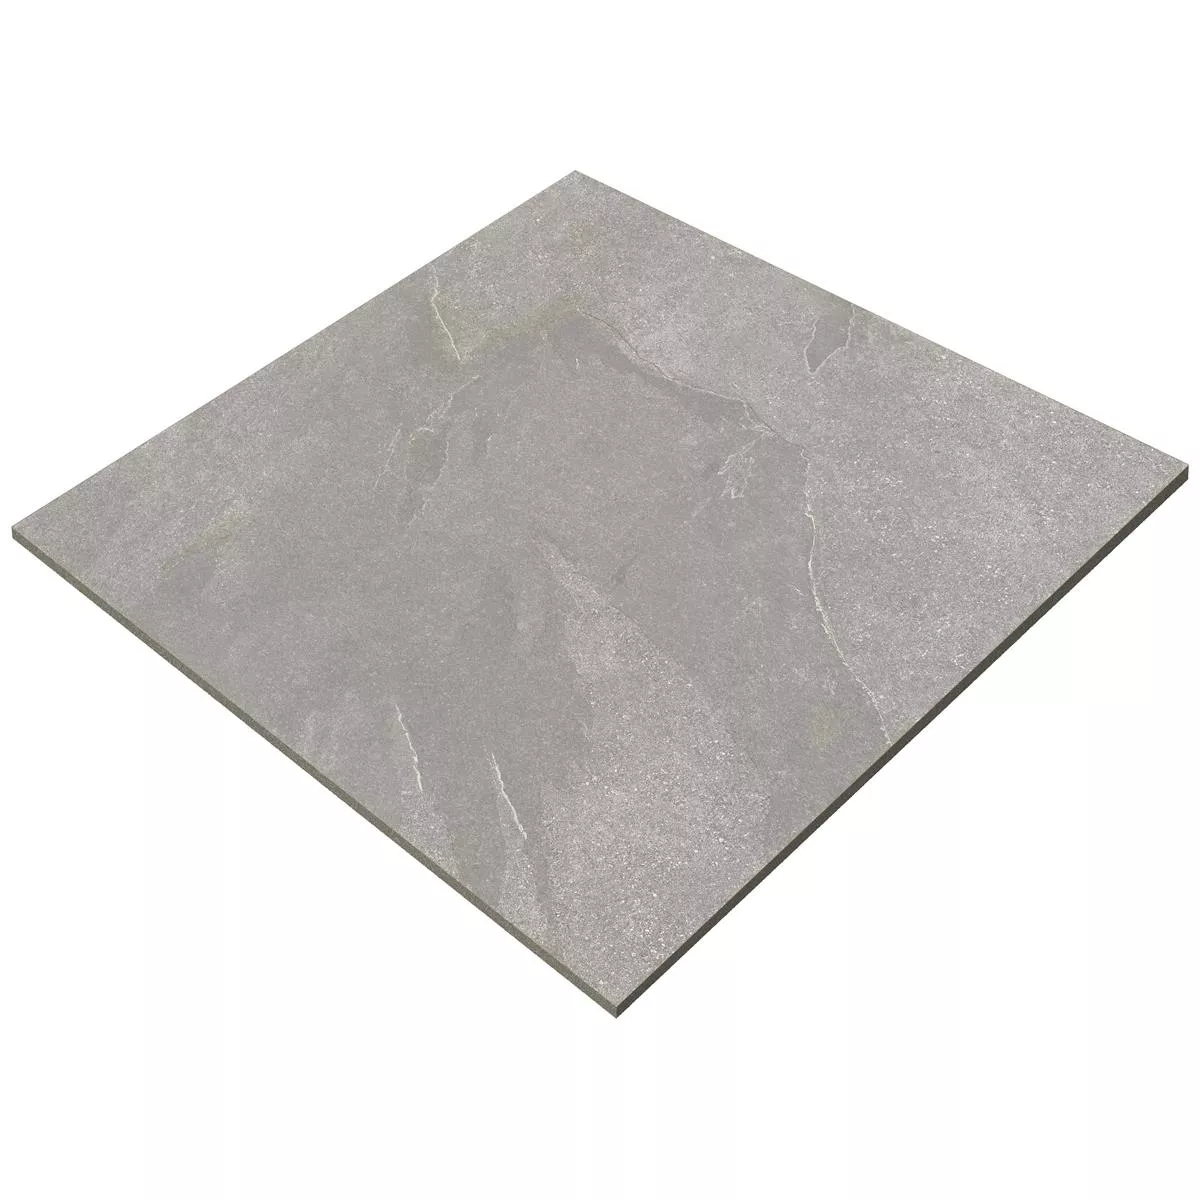 Sample Floor Tiles Memphis Stone Optic R10/B Grey 60x60cm